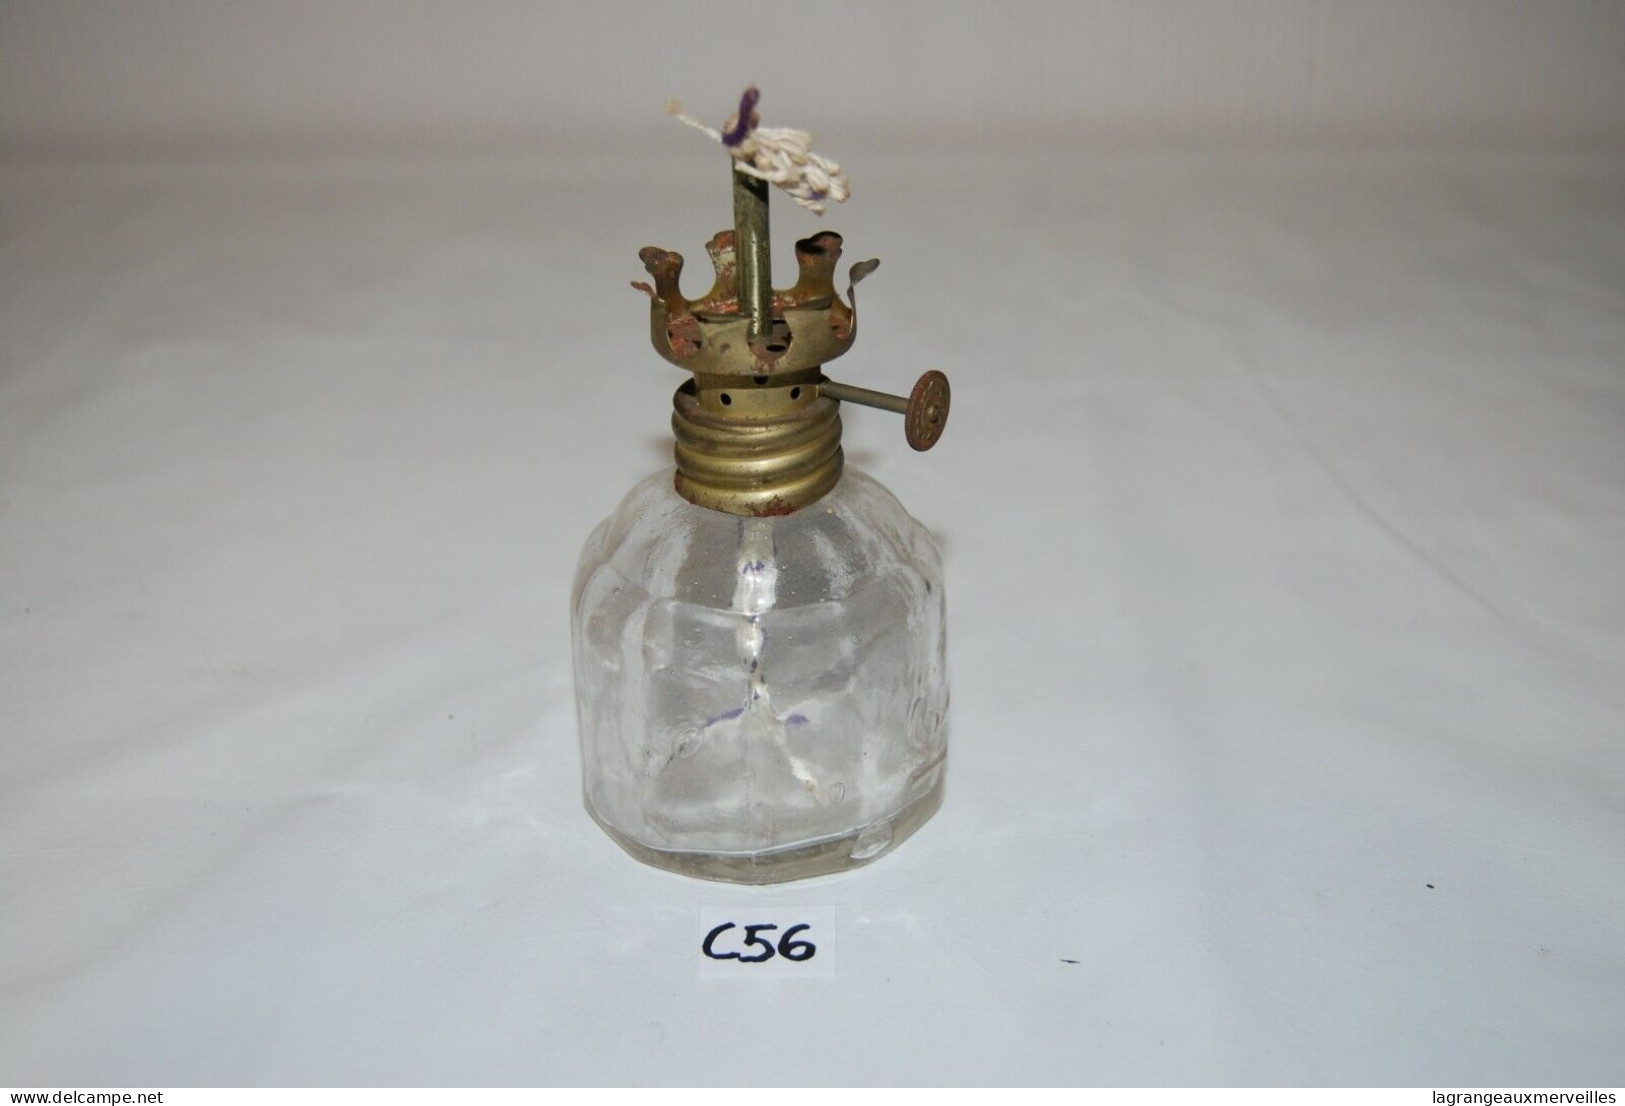 C56 Ancienne Lampe à Brûler - Old Lamp - Popular Art